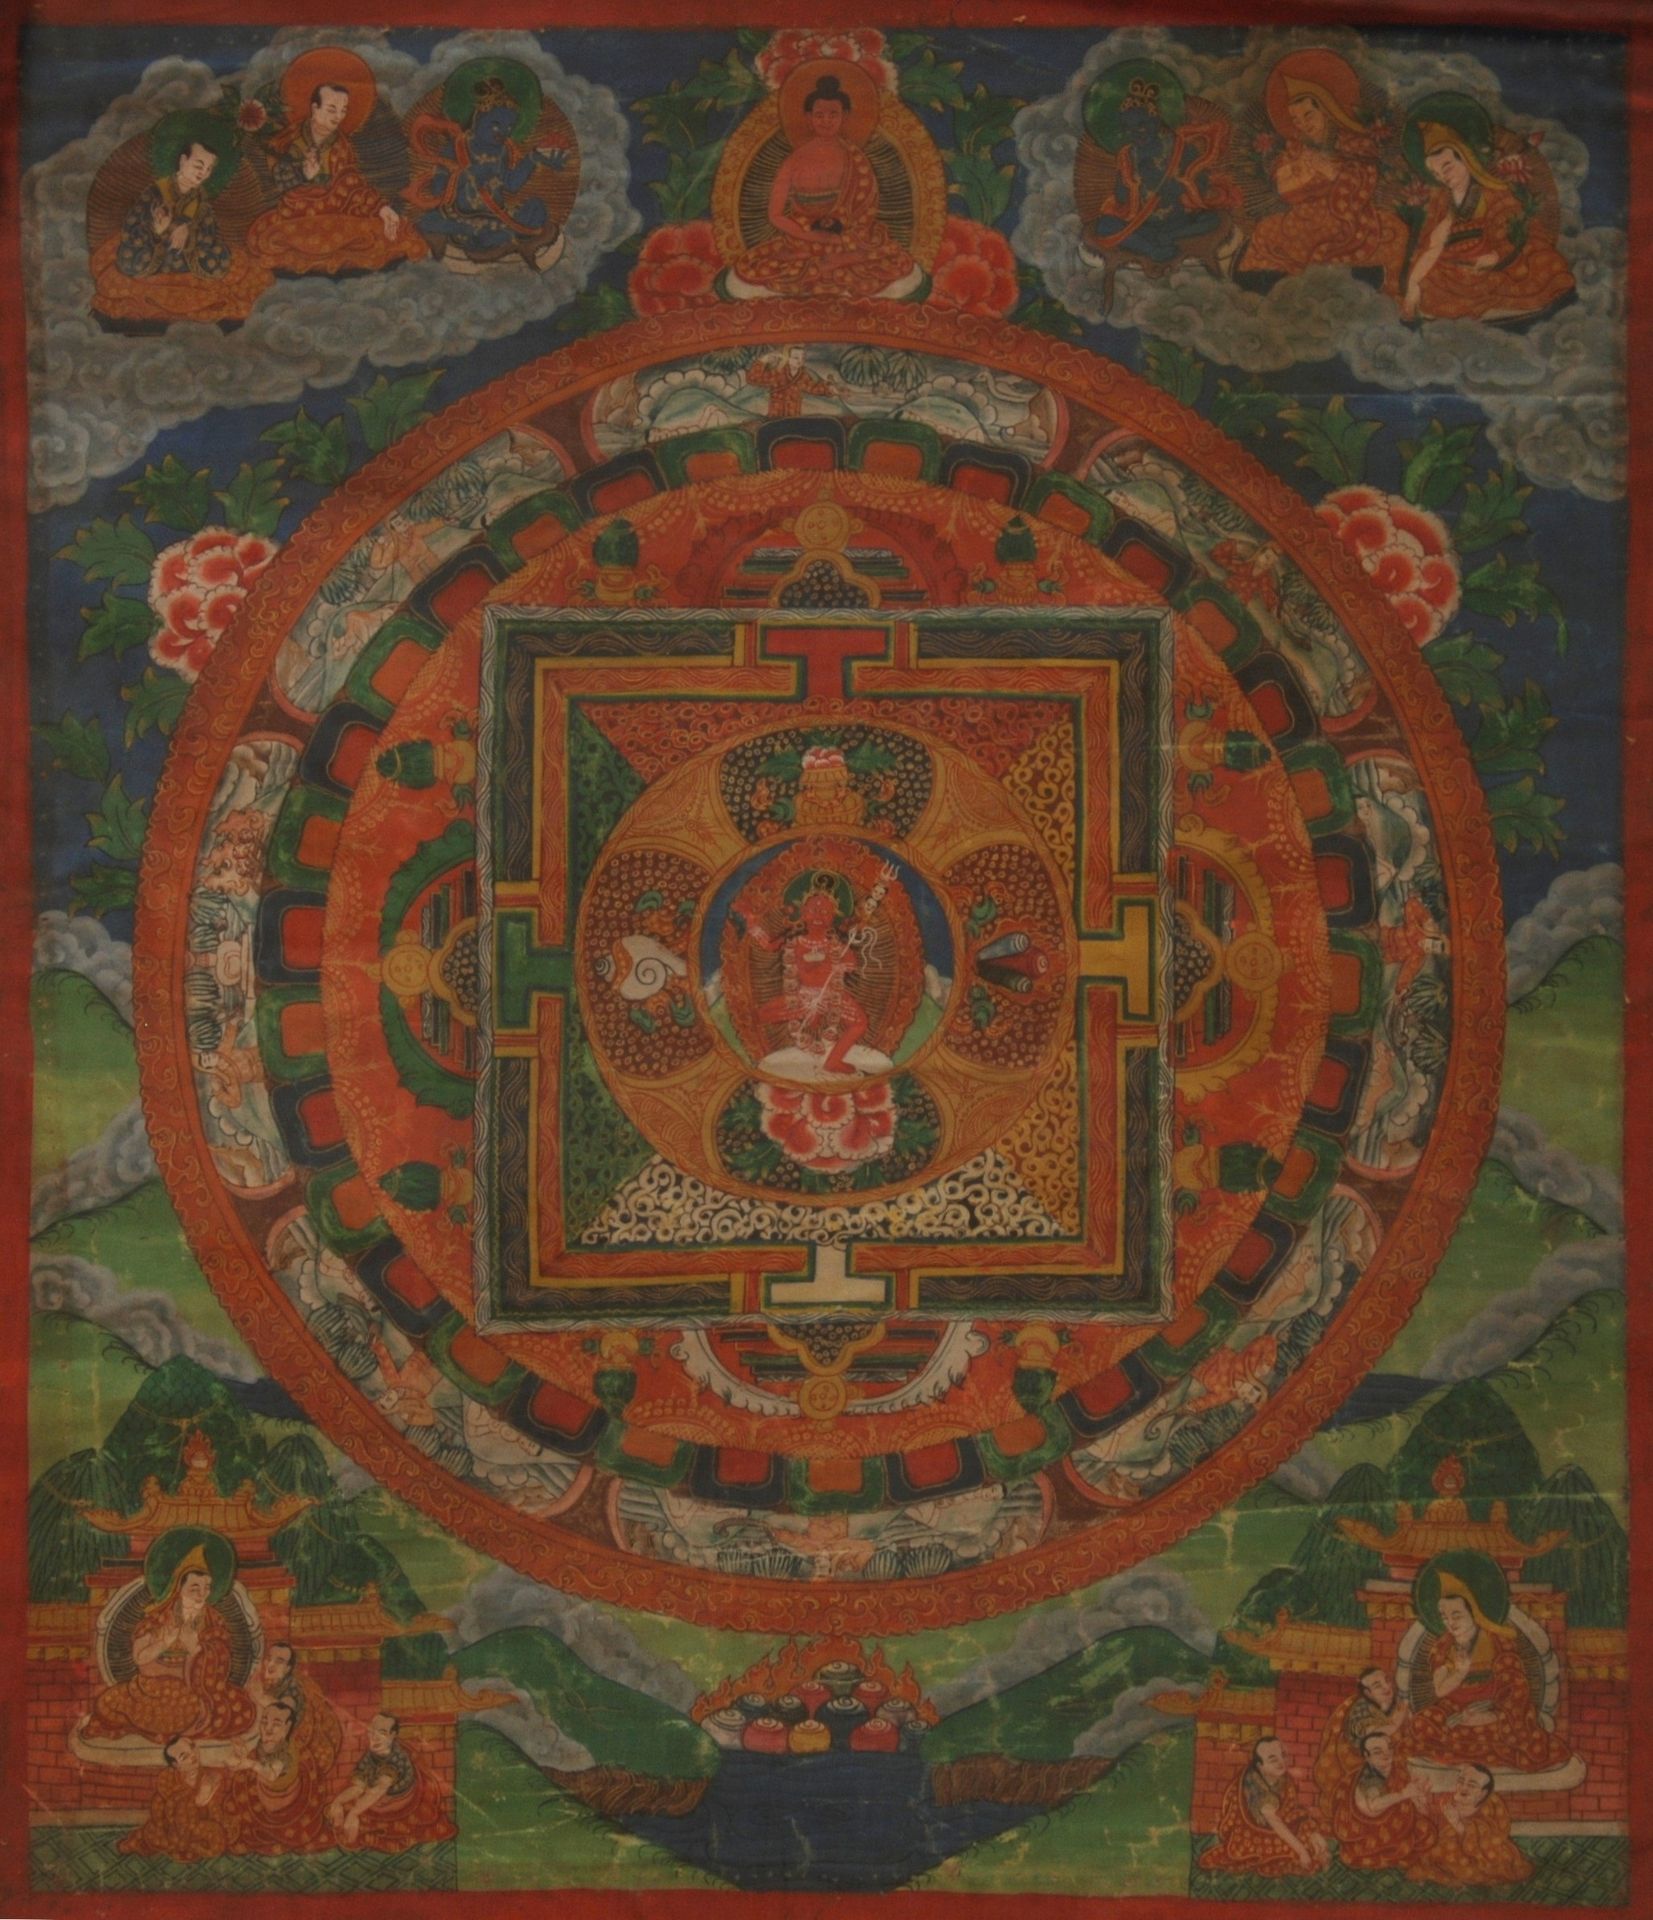 Thangka tibetana Thangka tibetano
Dimensiones: cm 40x48